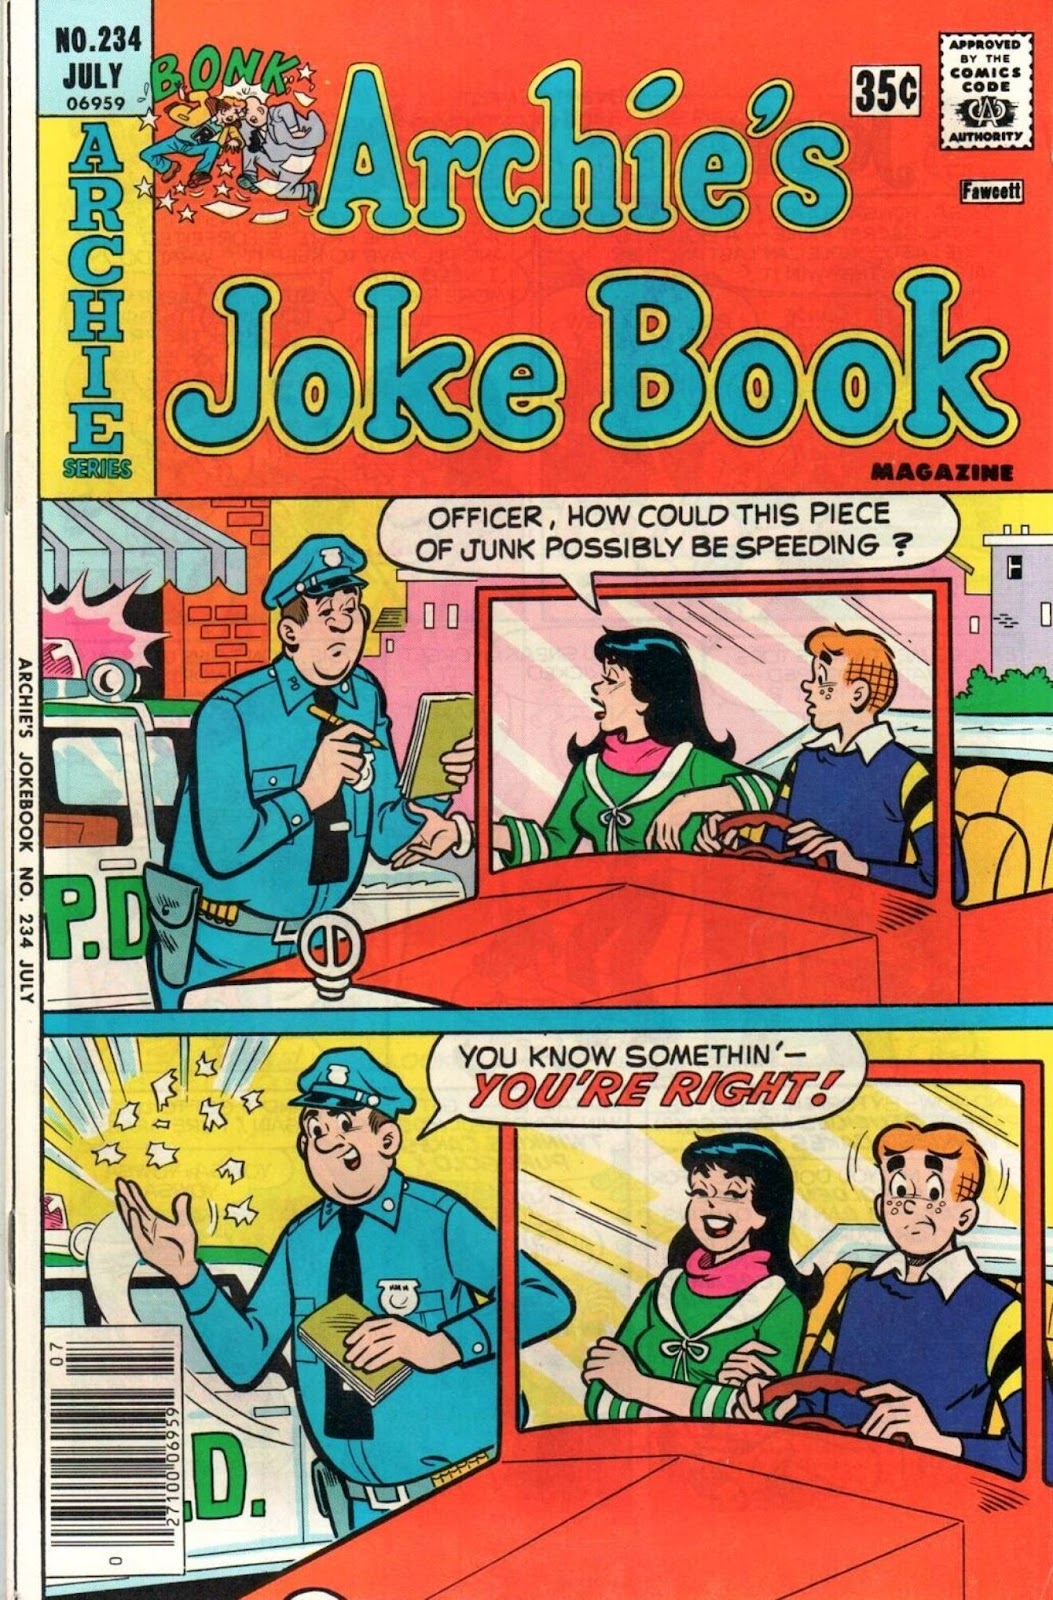 Archie's Joke Book Magazine issue 234 - Page 1